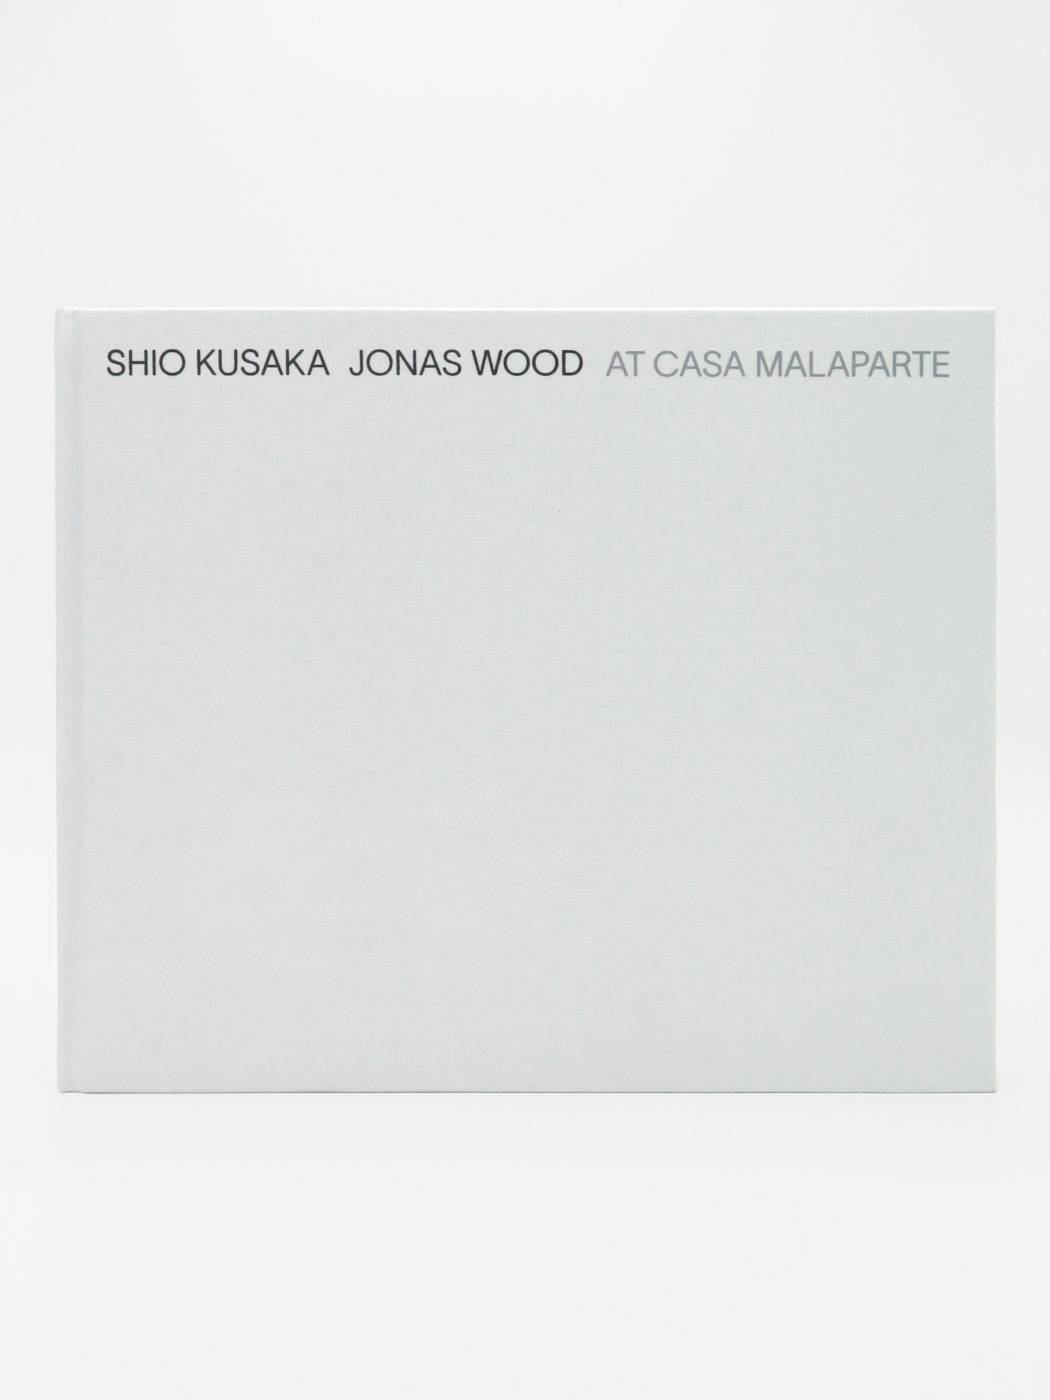 Shio Kusaka and Jonas Wood at Casa Malaparte